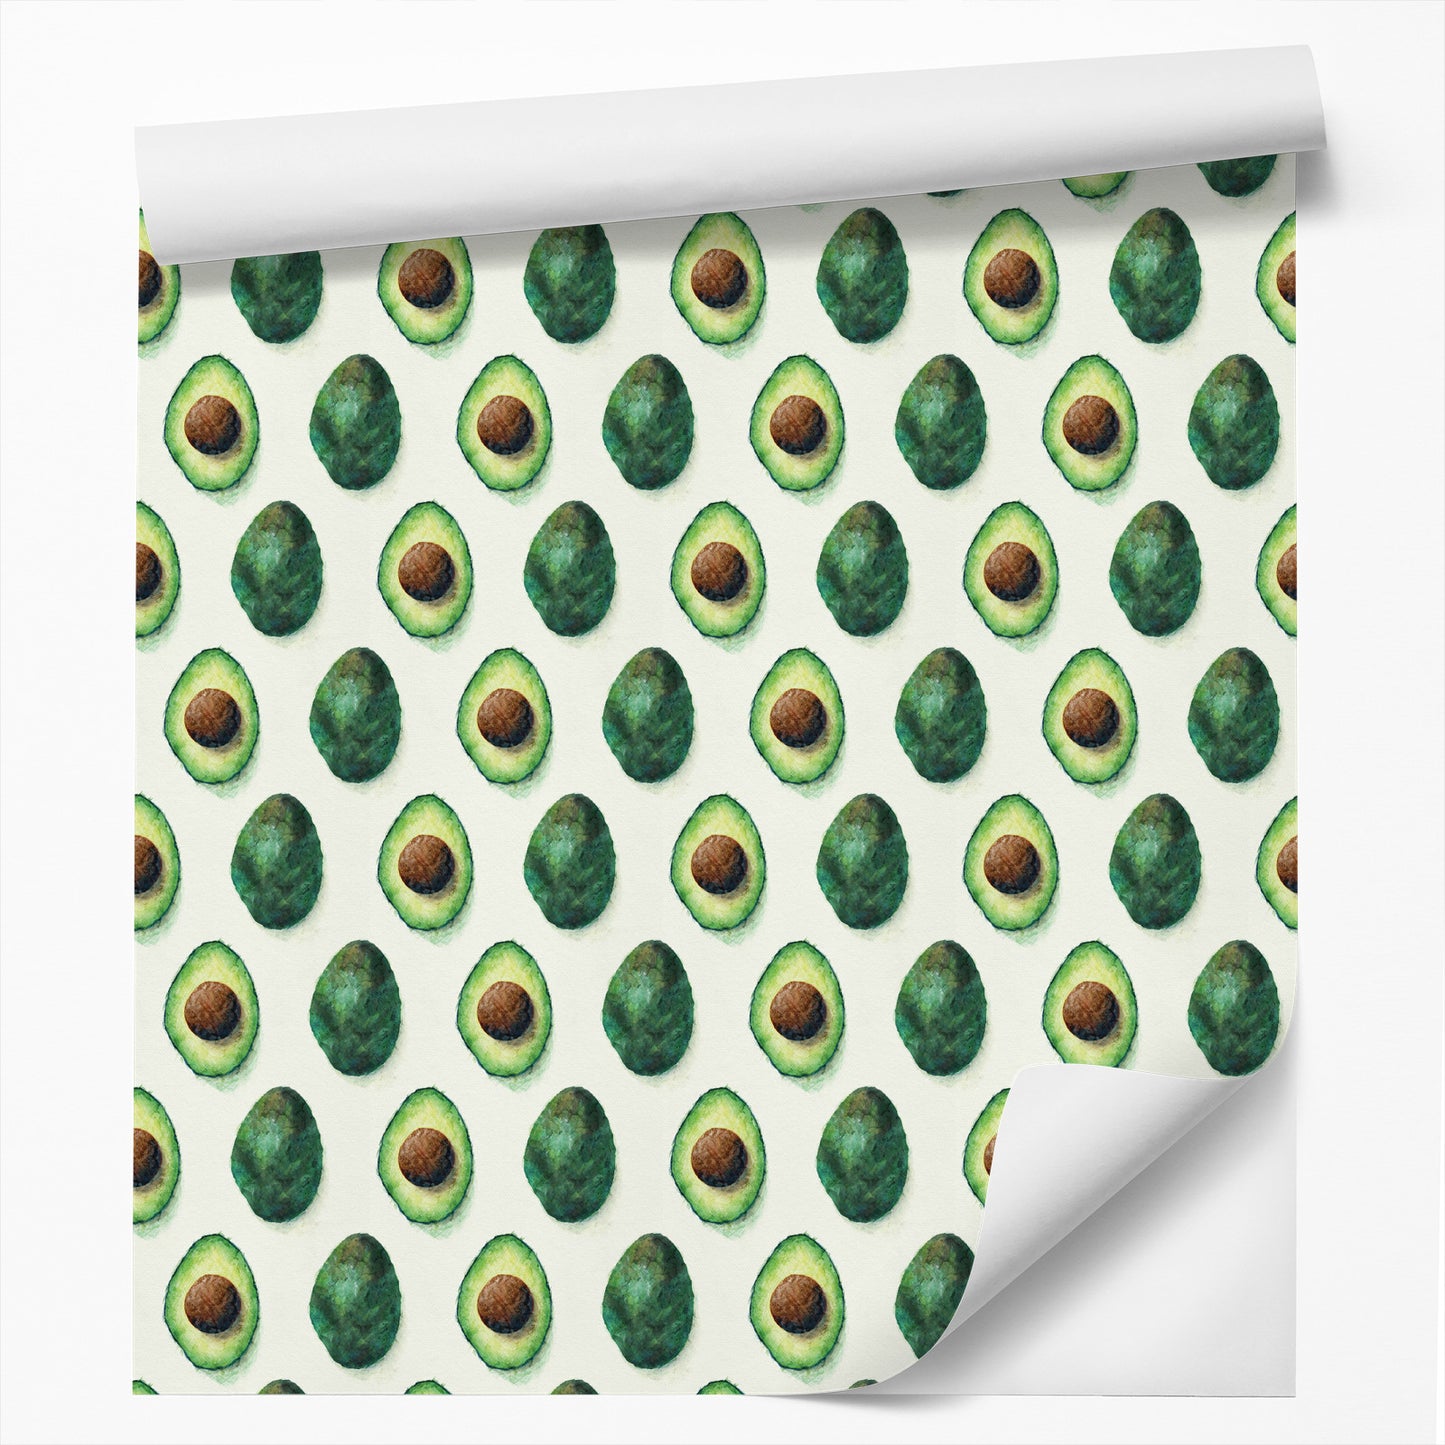 18' L x 24" W Peel & Stick Wallpaper Roll - Avocado Pattern by Tracie &rews - Wallpaper - Americanflat